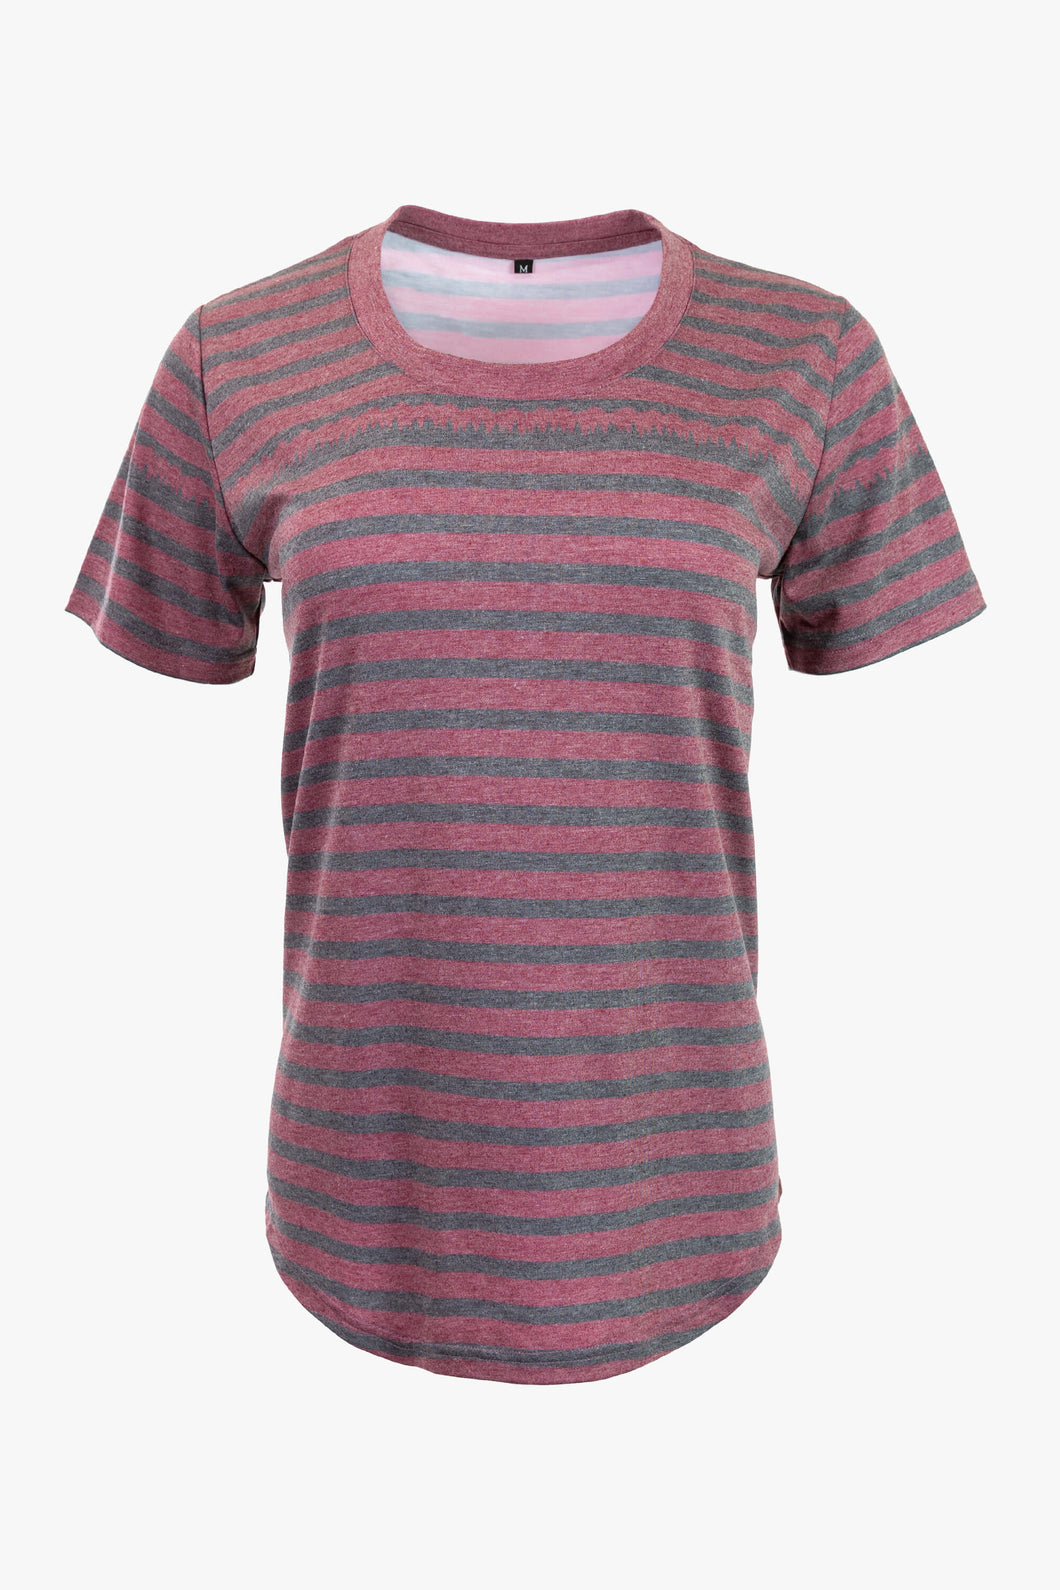 Belong - Women's Torrey's Striped T-Shirt (Maroon)